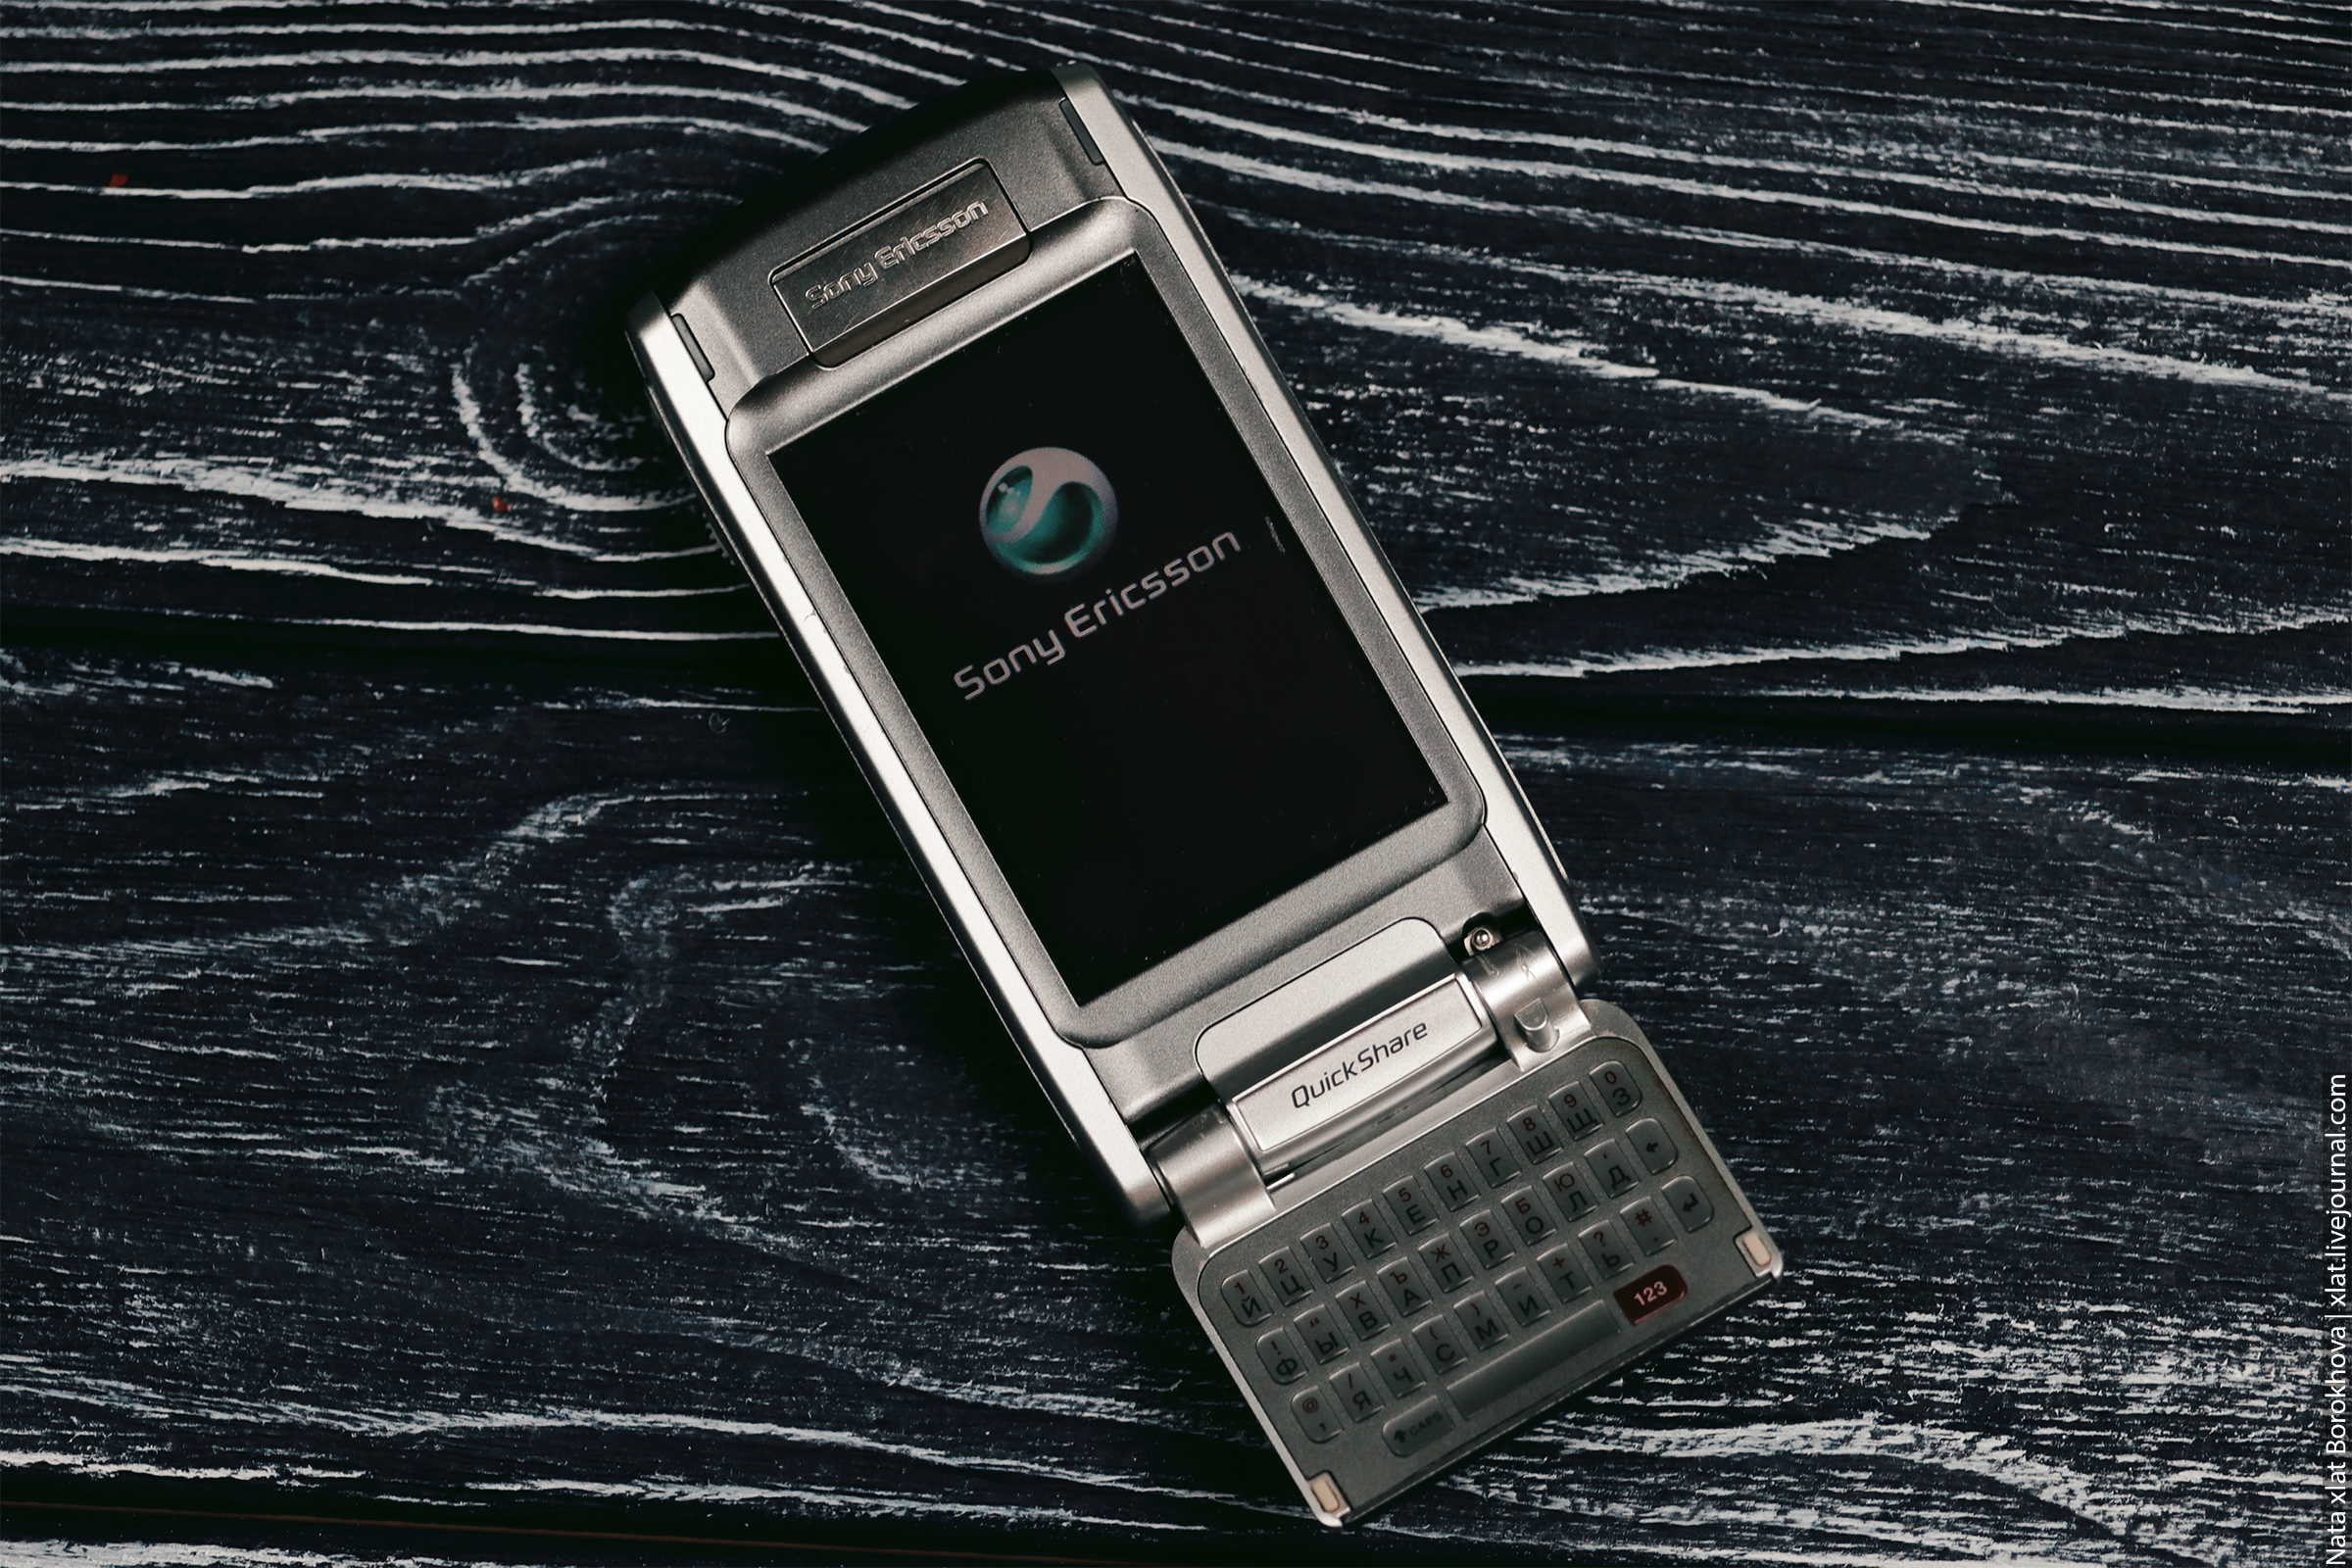 Sony Ericsson t910i